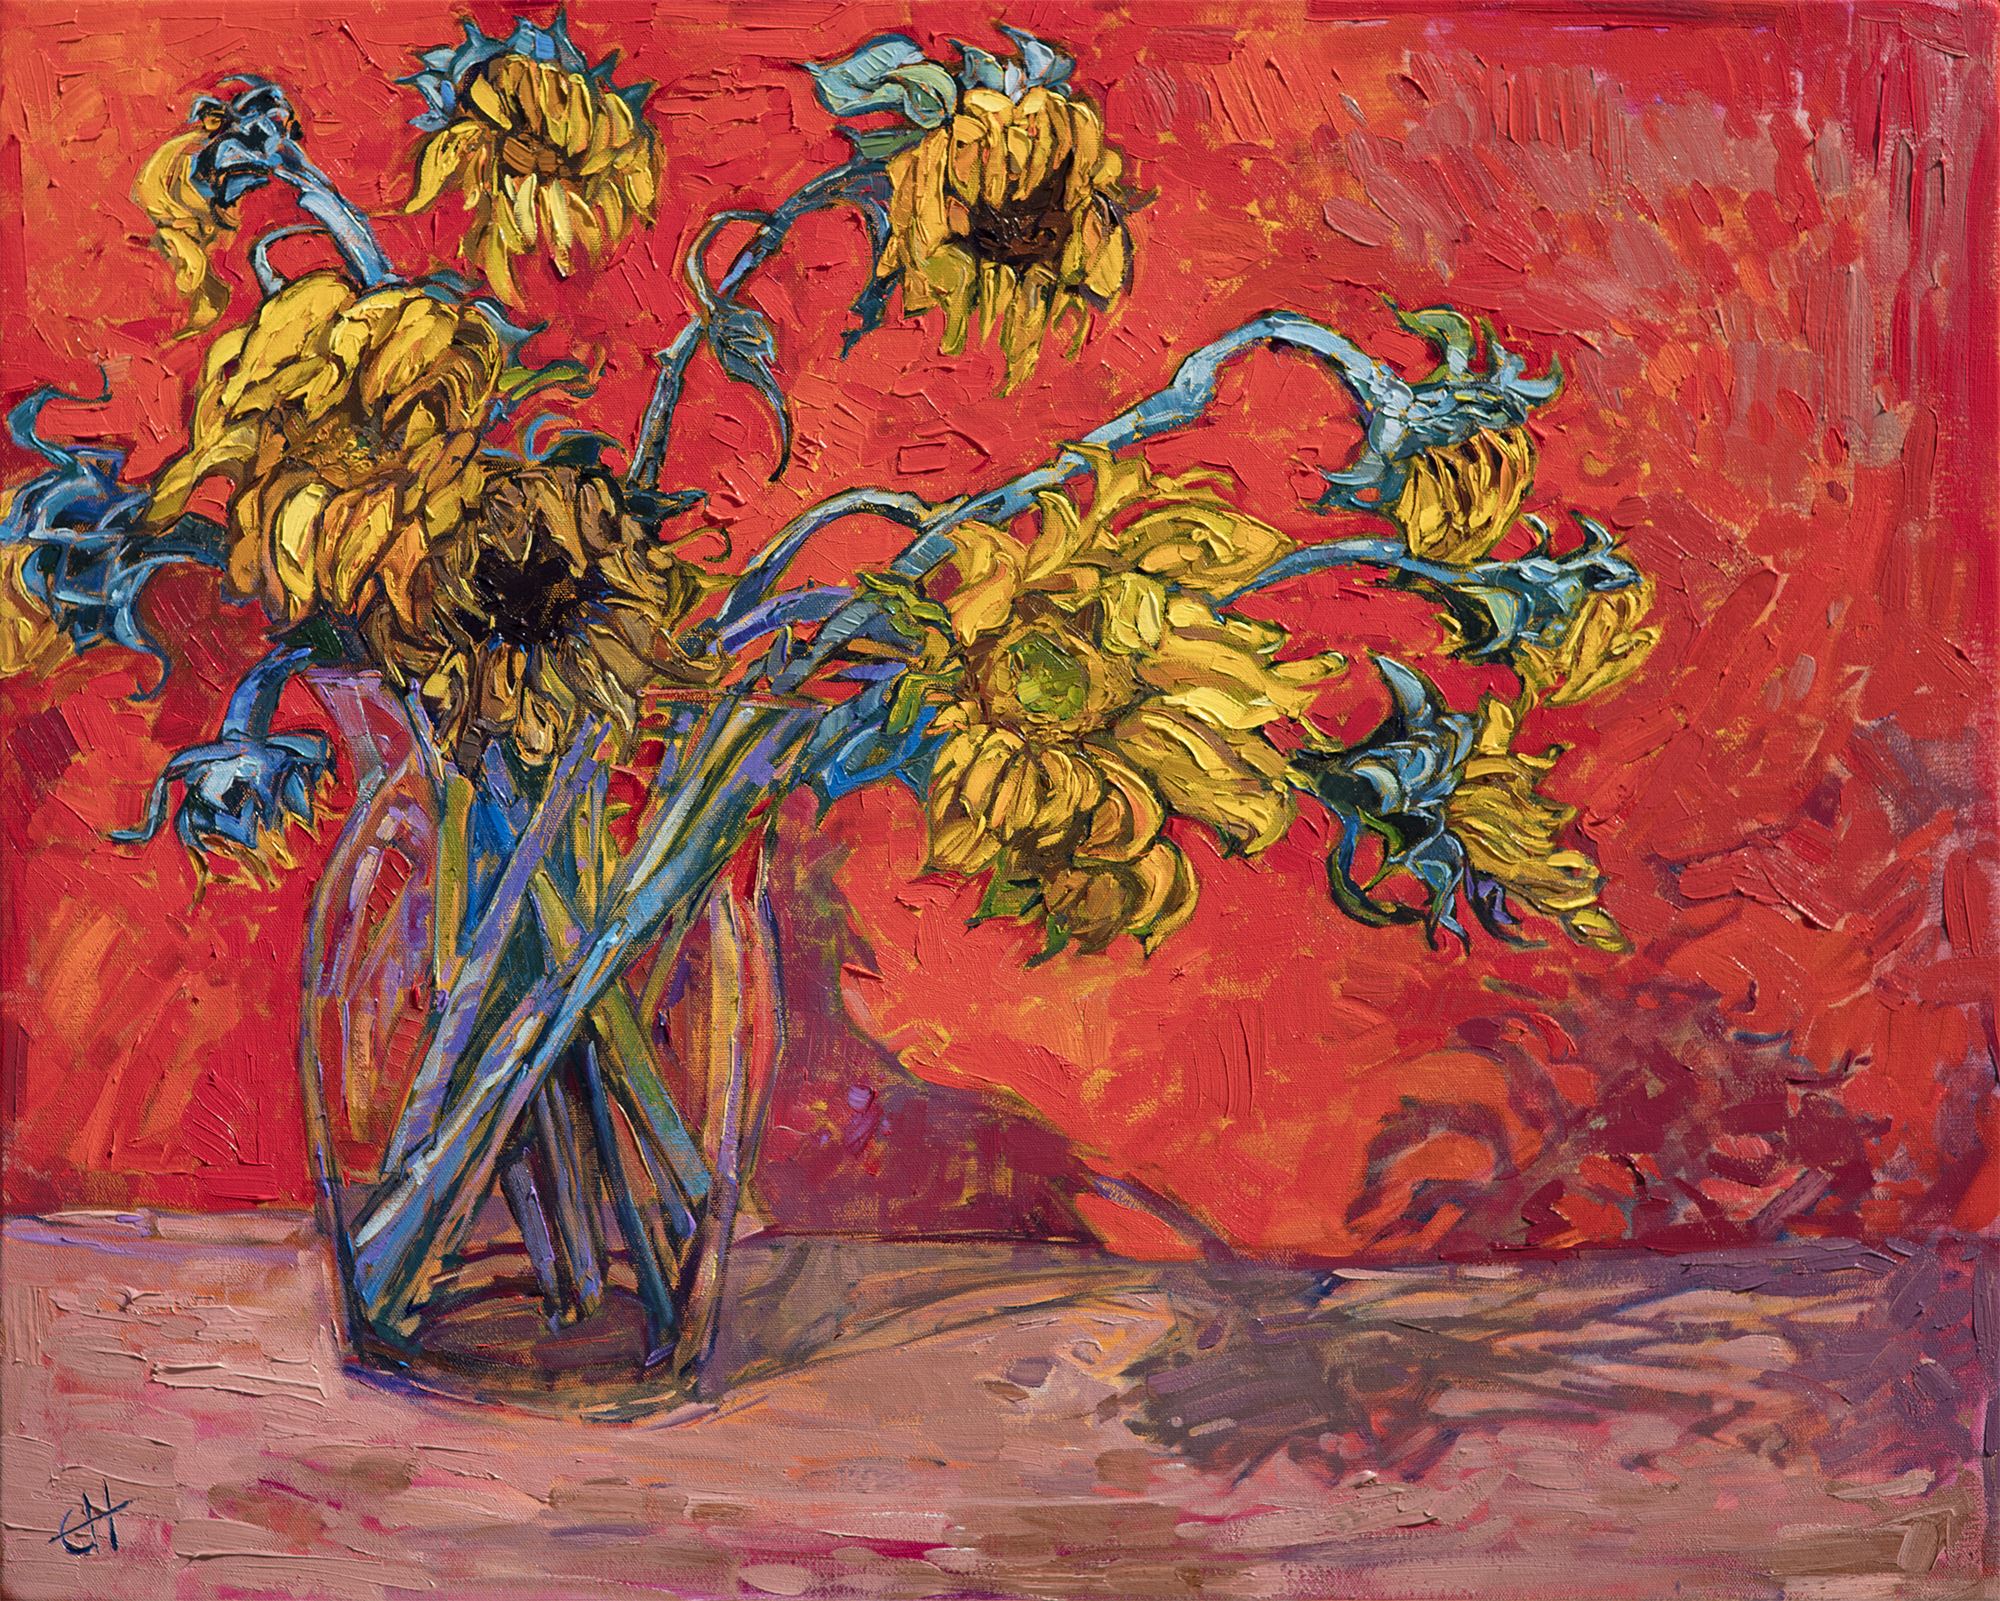 An Erin Hanson sunflower painting